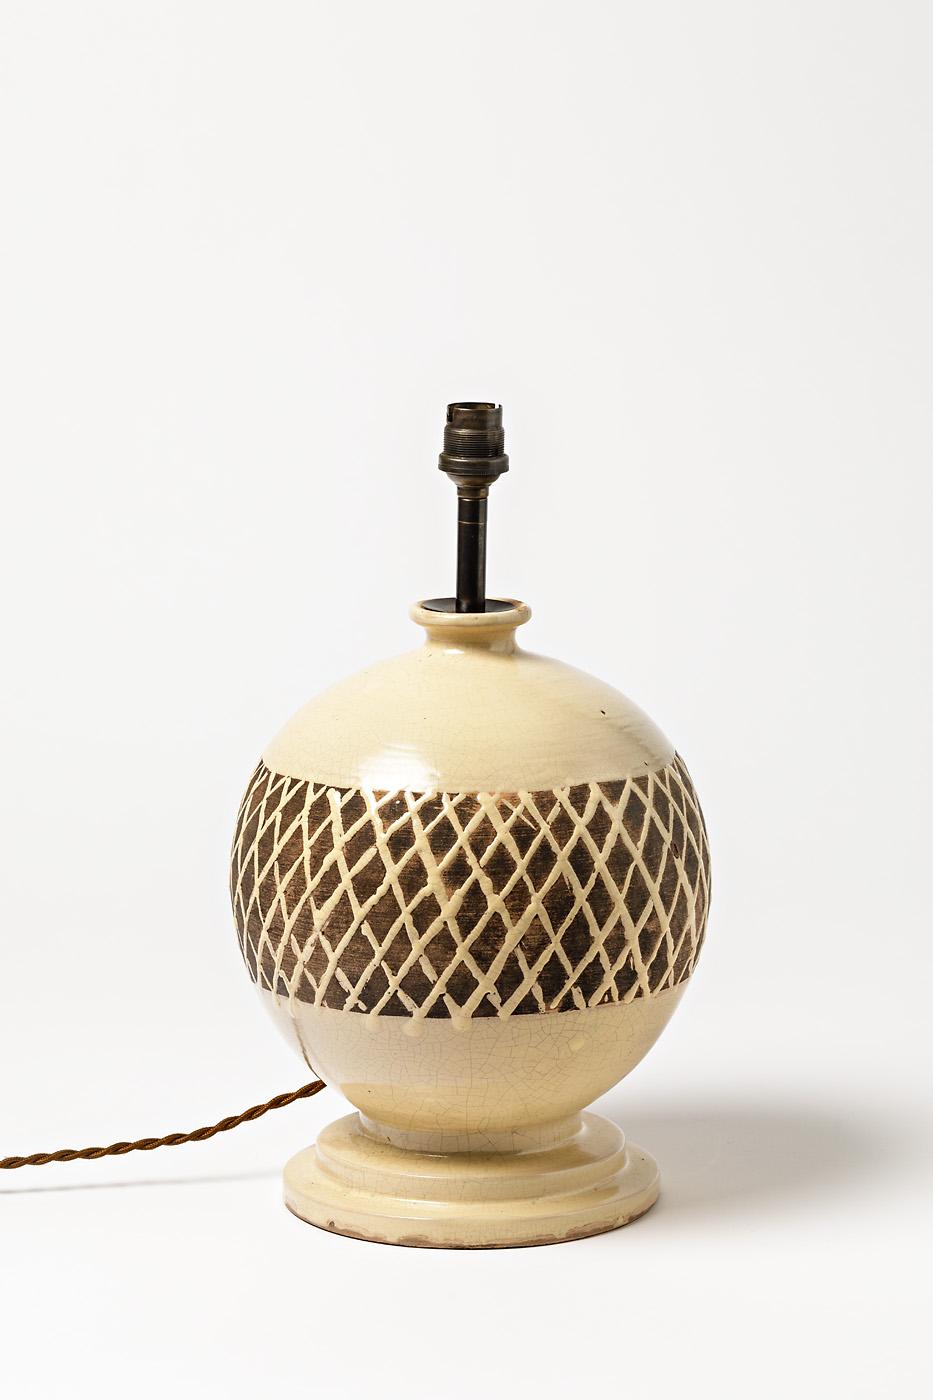 Beaux Arts Elegant Ceramic Lamp Signed JB under the Base, Made in France, circa 1930